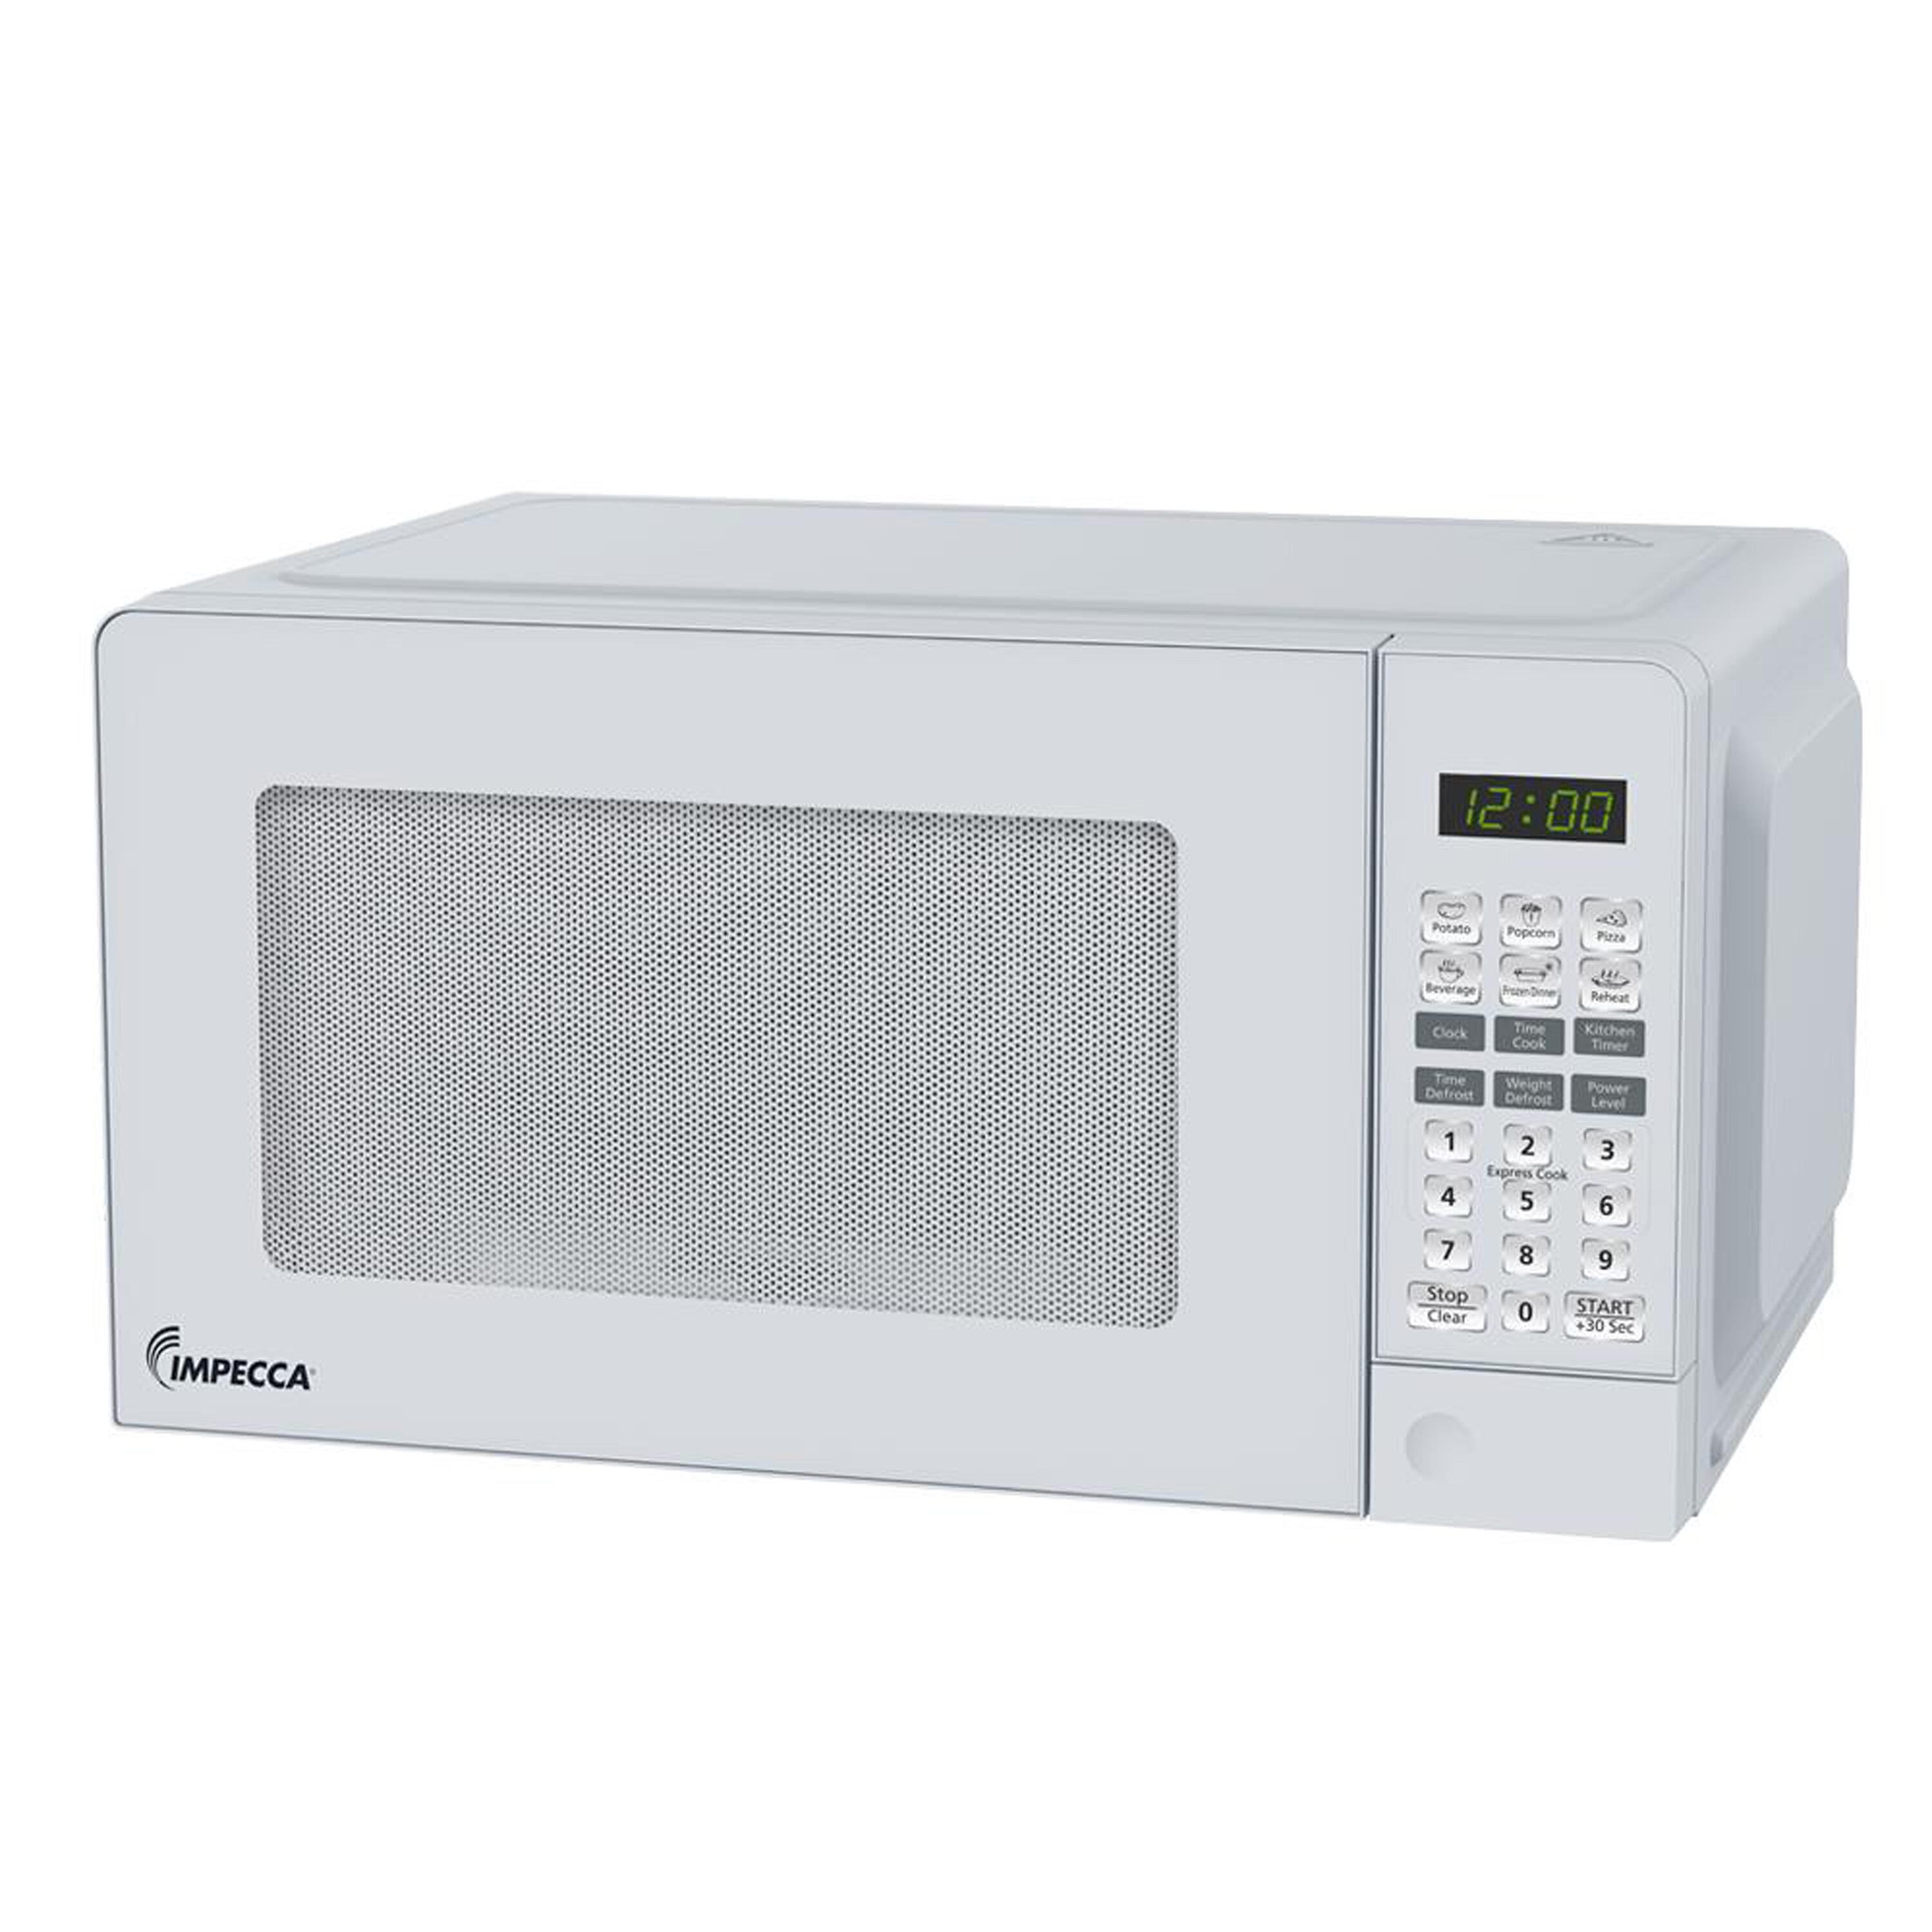 Comfee Retro 0.7-cu ft 700-Watt Countertop Microwave (Green) in the  Countertop Microwaves department at